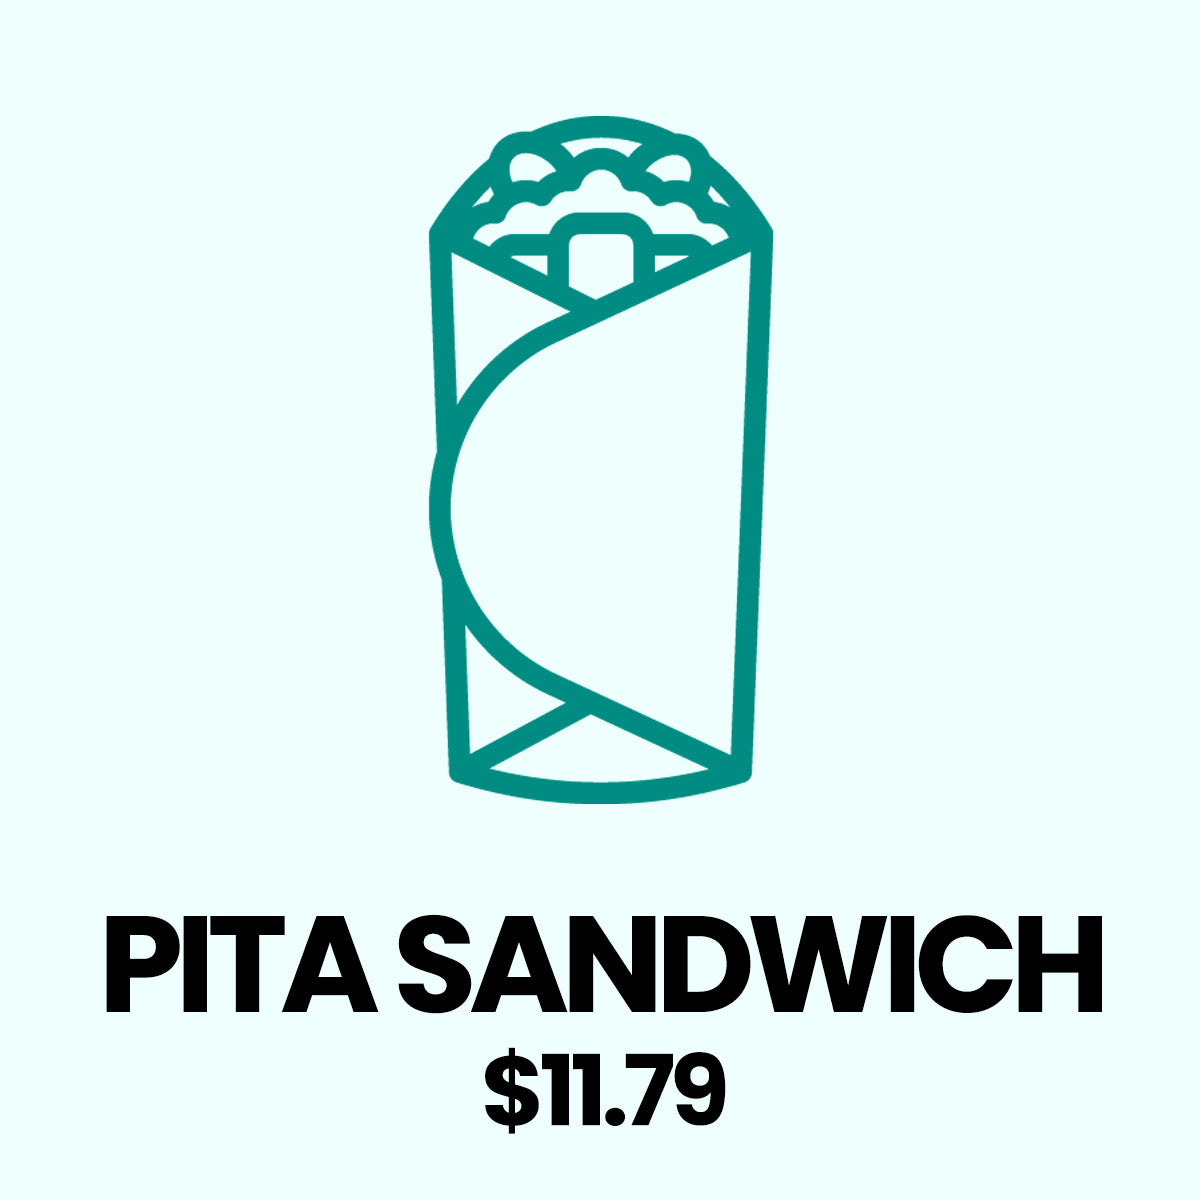 Build Your Own Pita Sandwich - $11.79